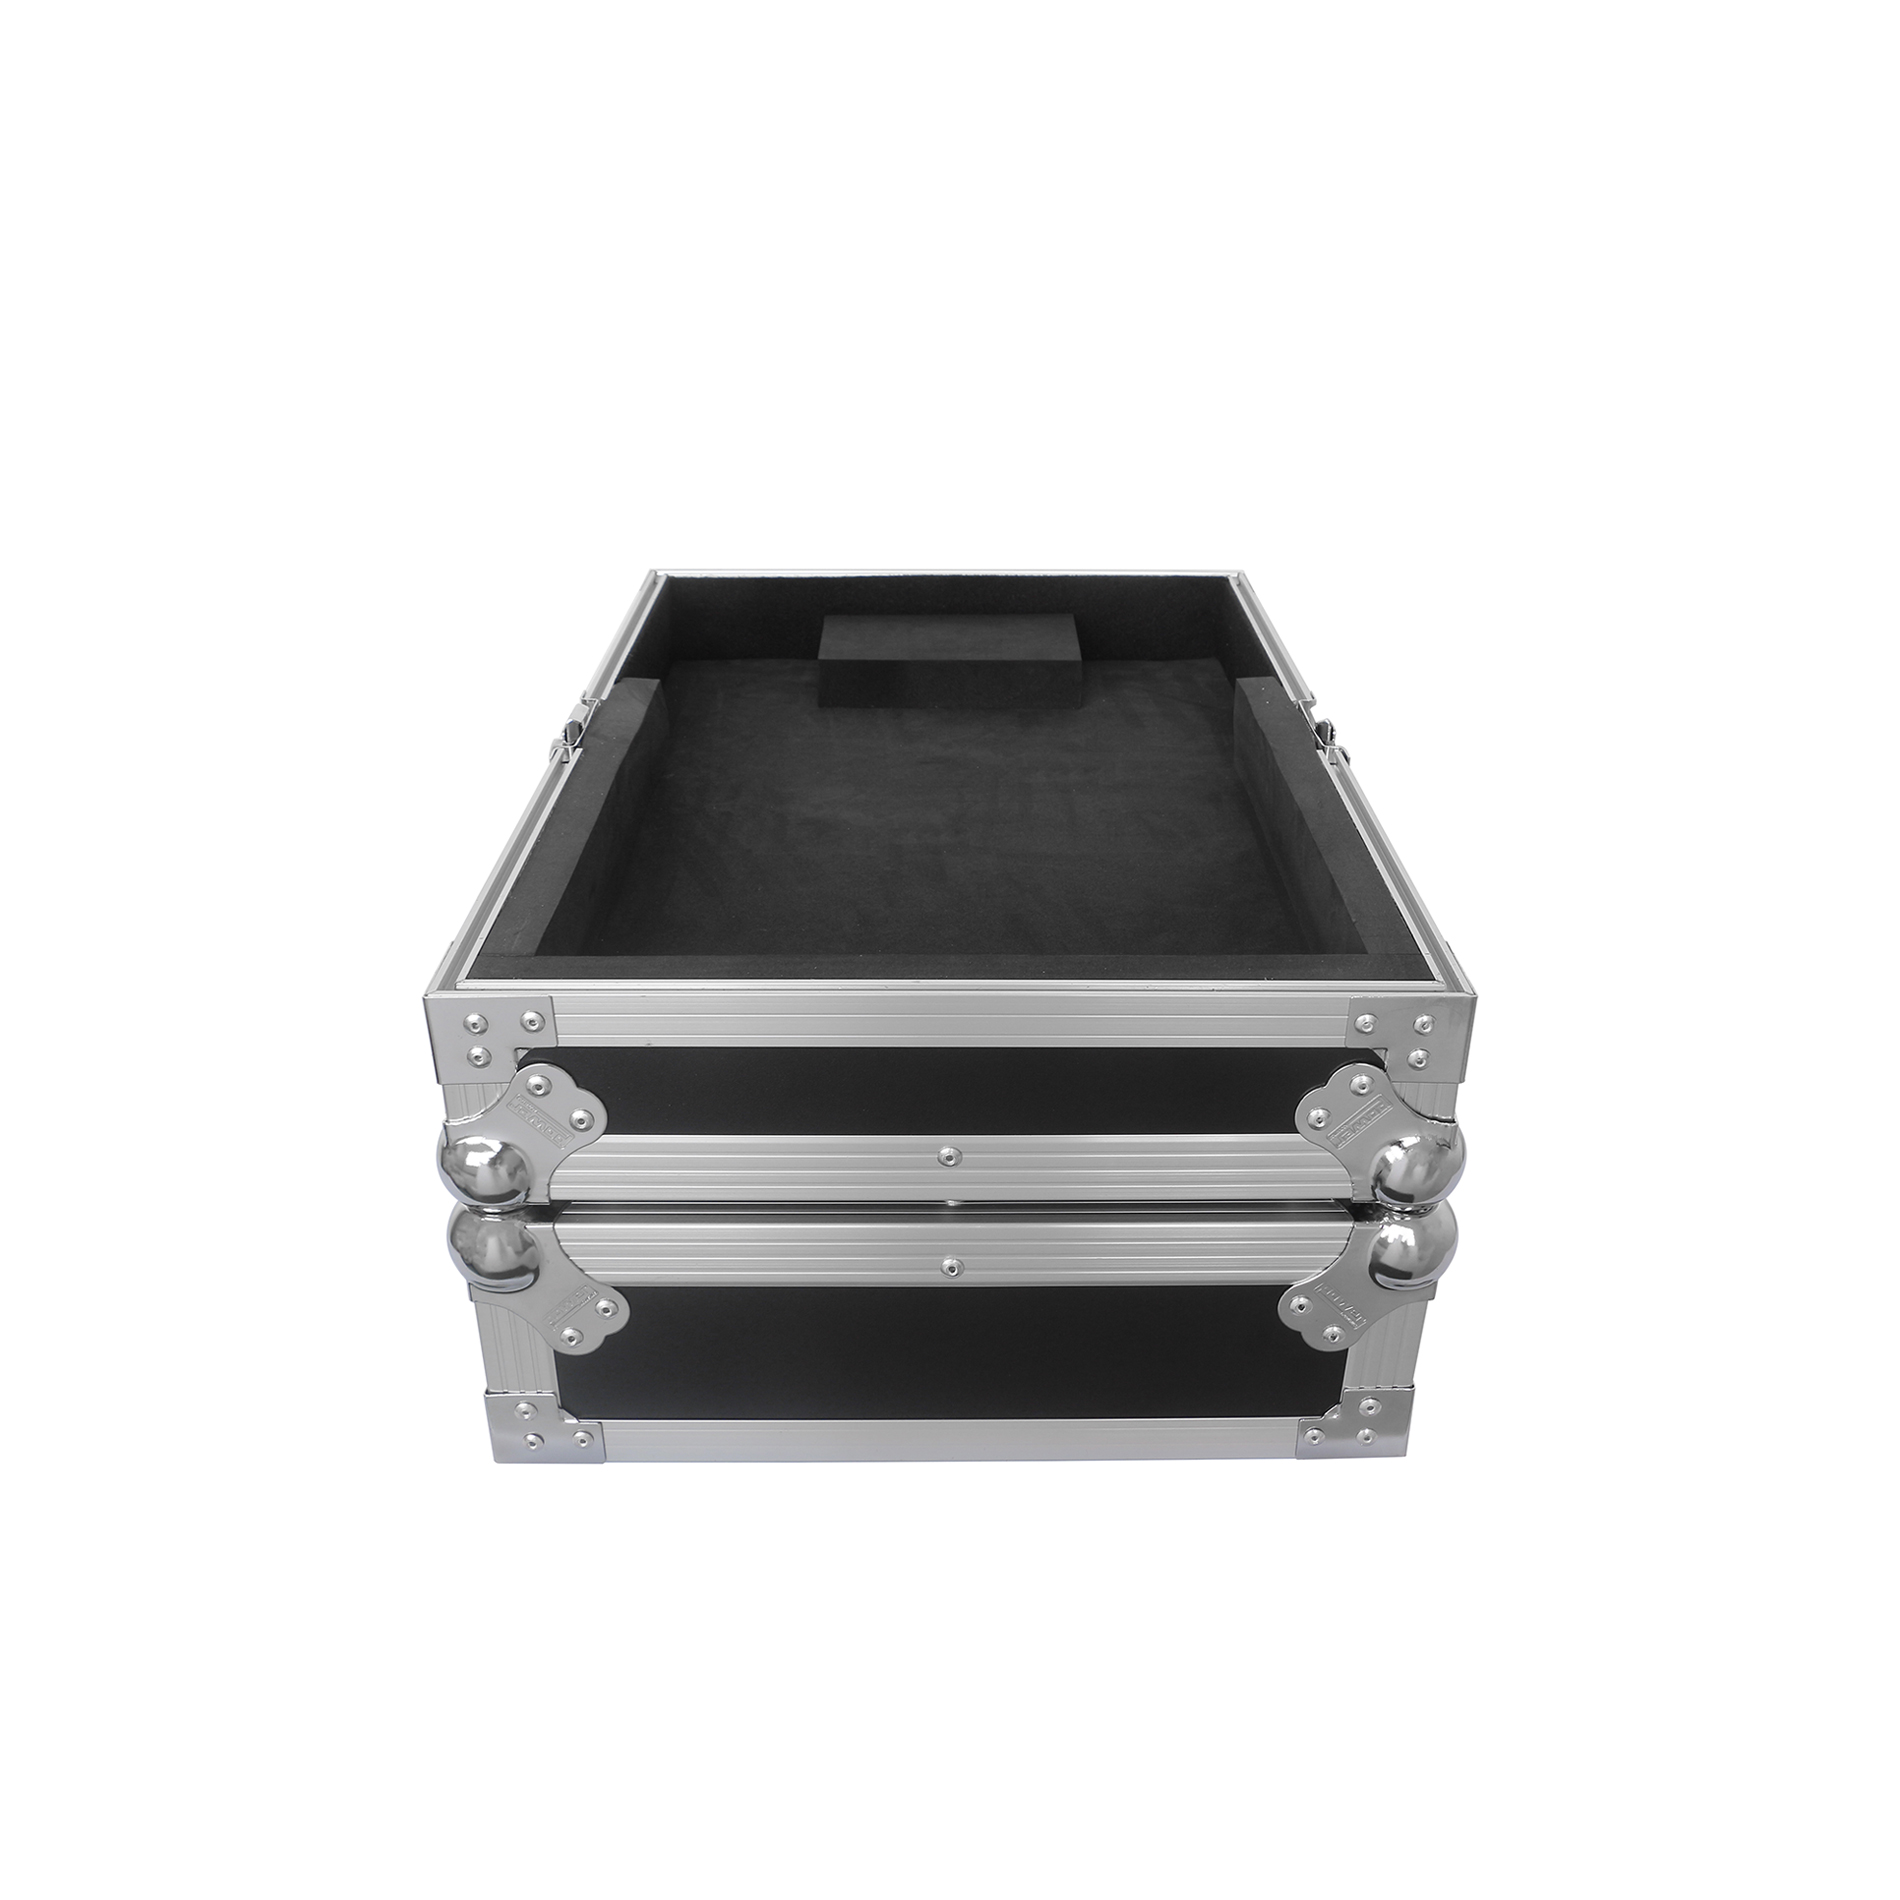 Power Acoustics Fcm Dm3s - Cases for mixing desk - Variation 1